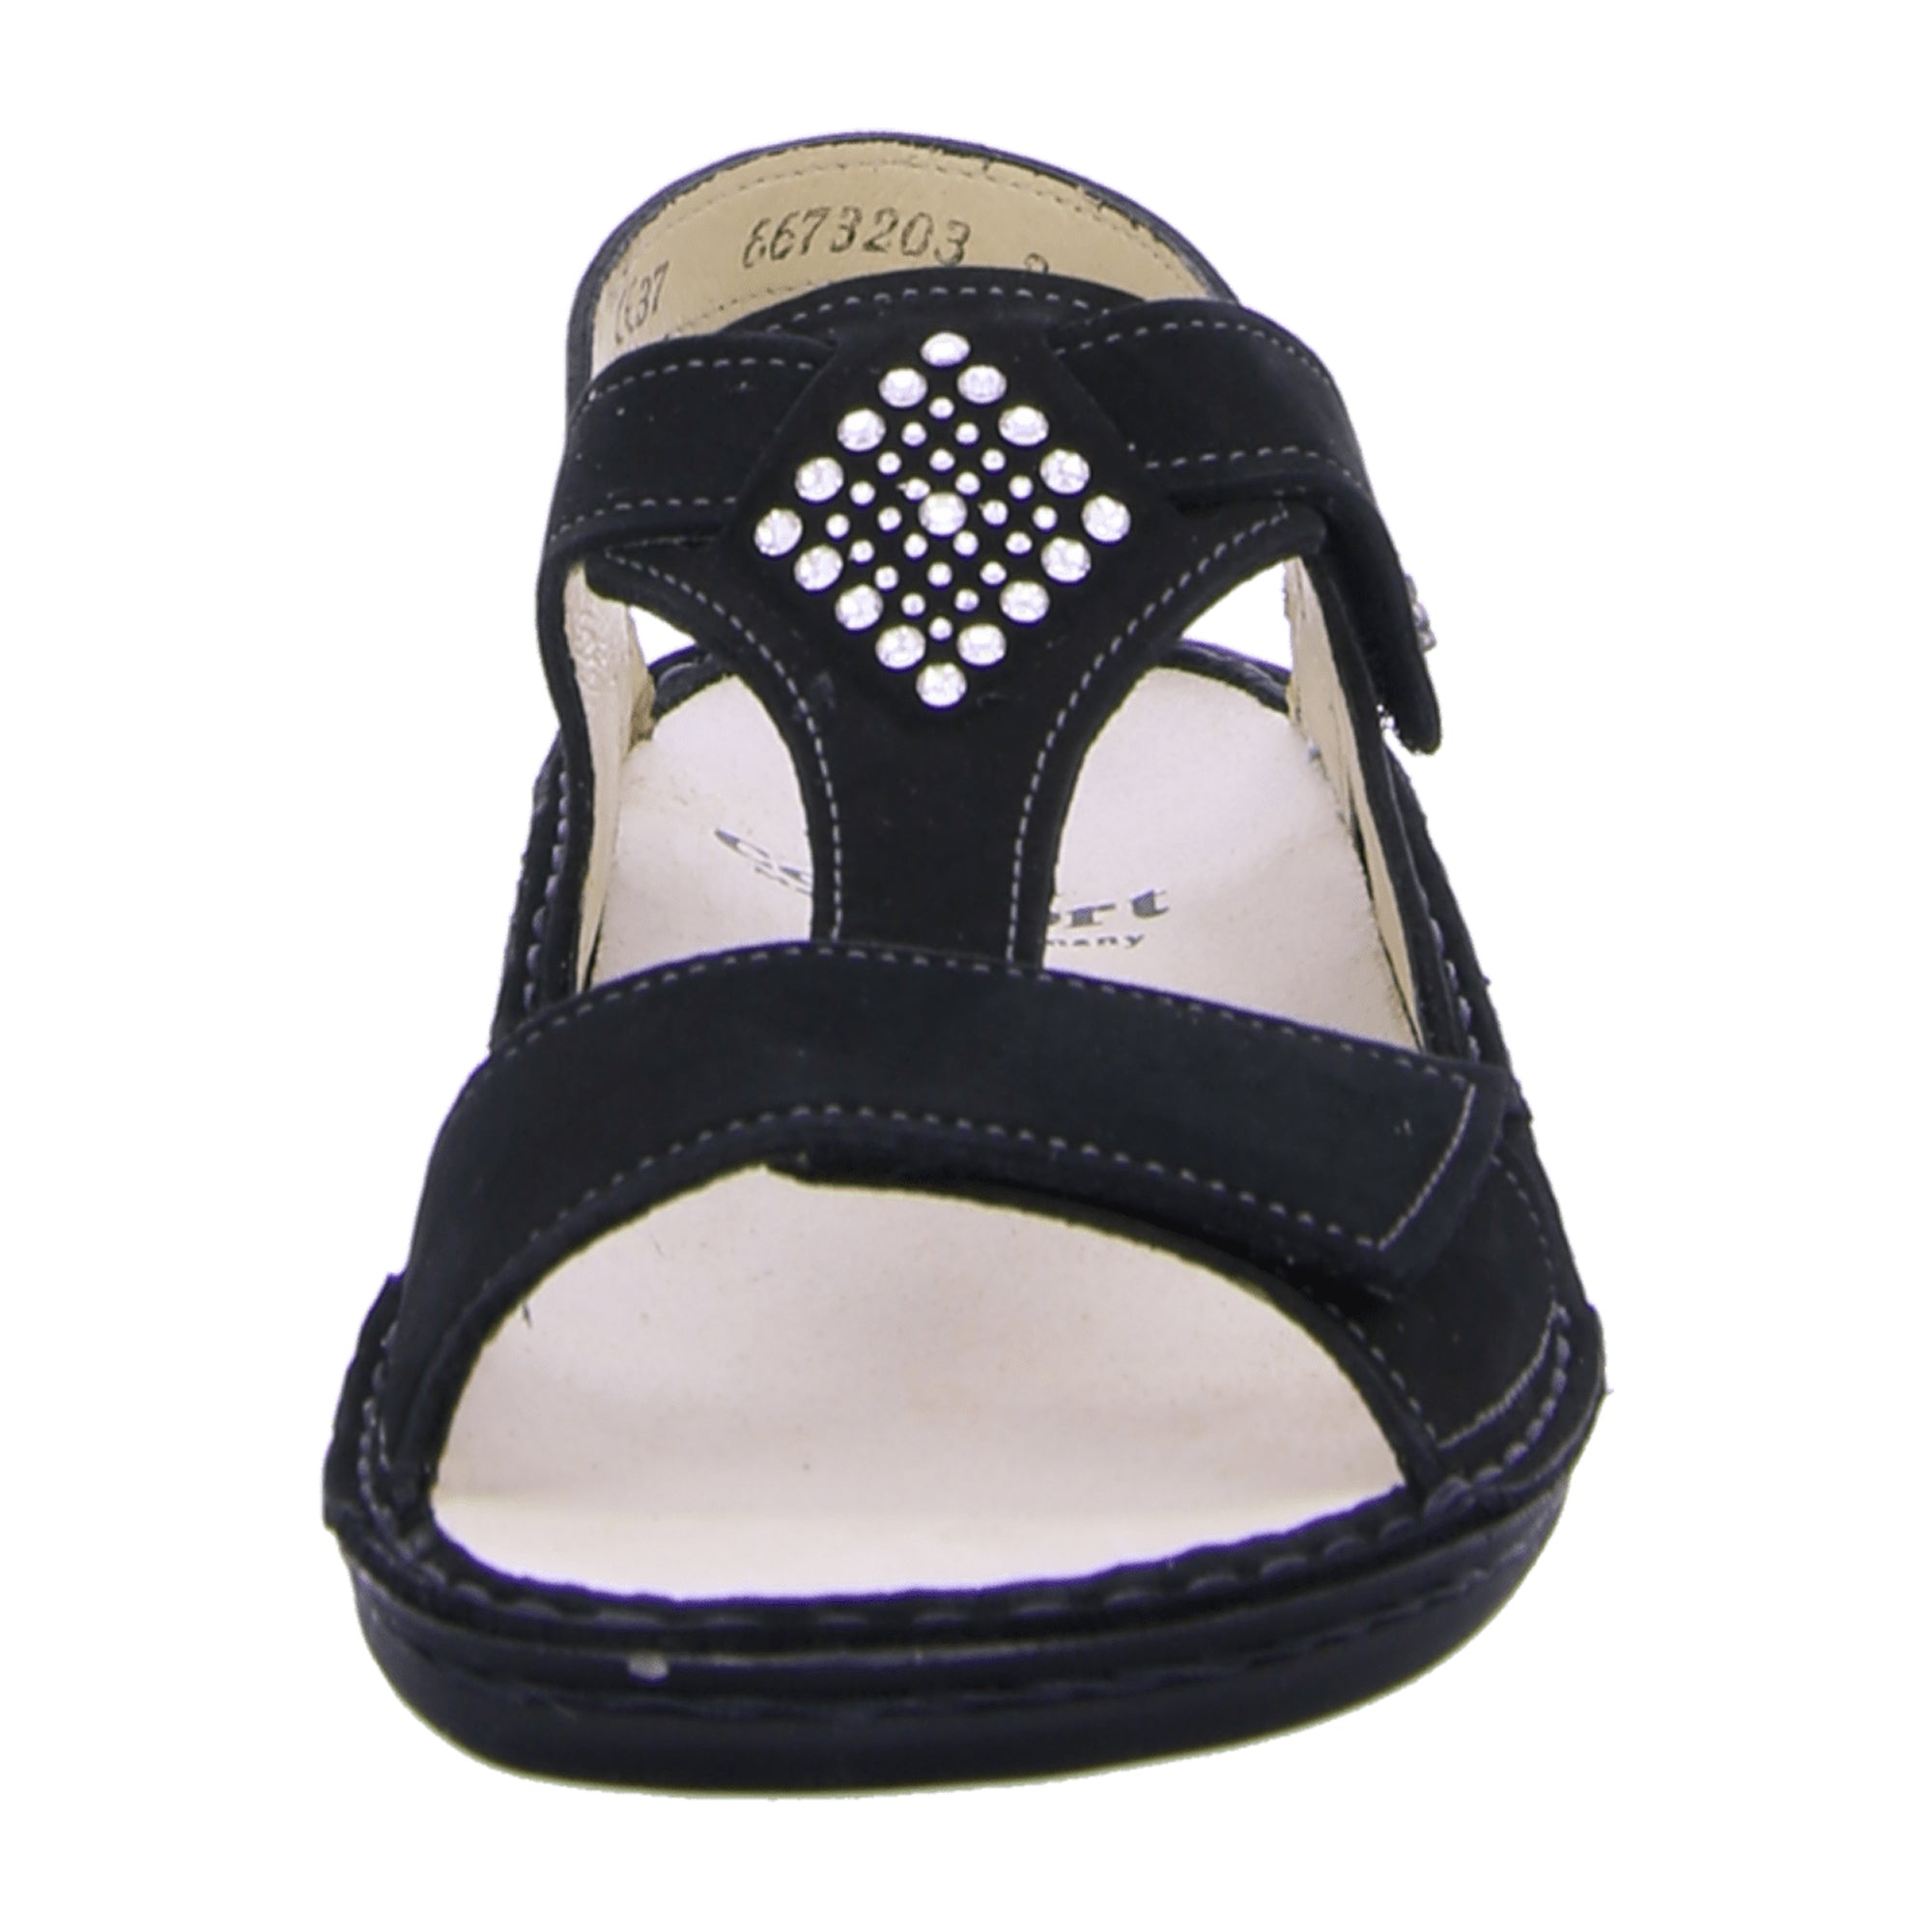 Finn Comfort Calvia Black Sandals for Women - Stylish & Comfortable